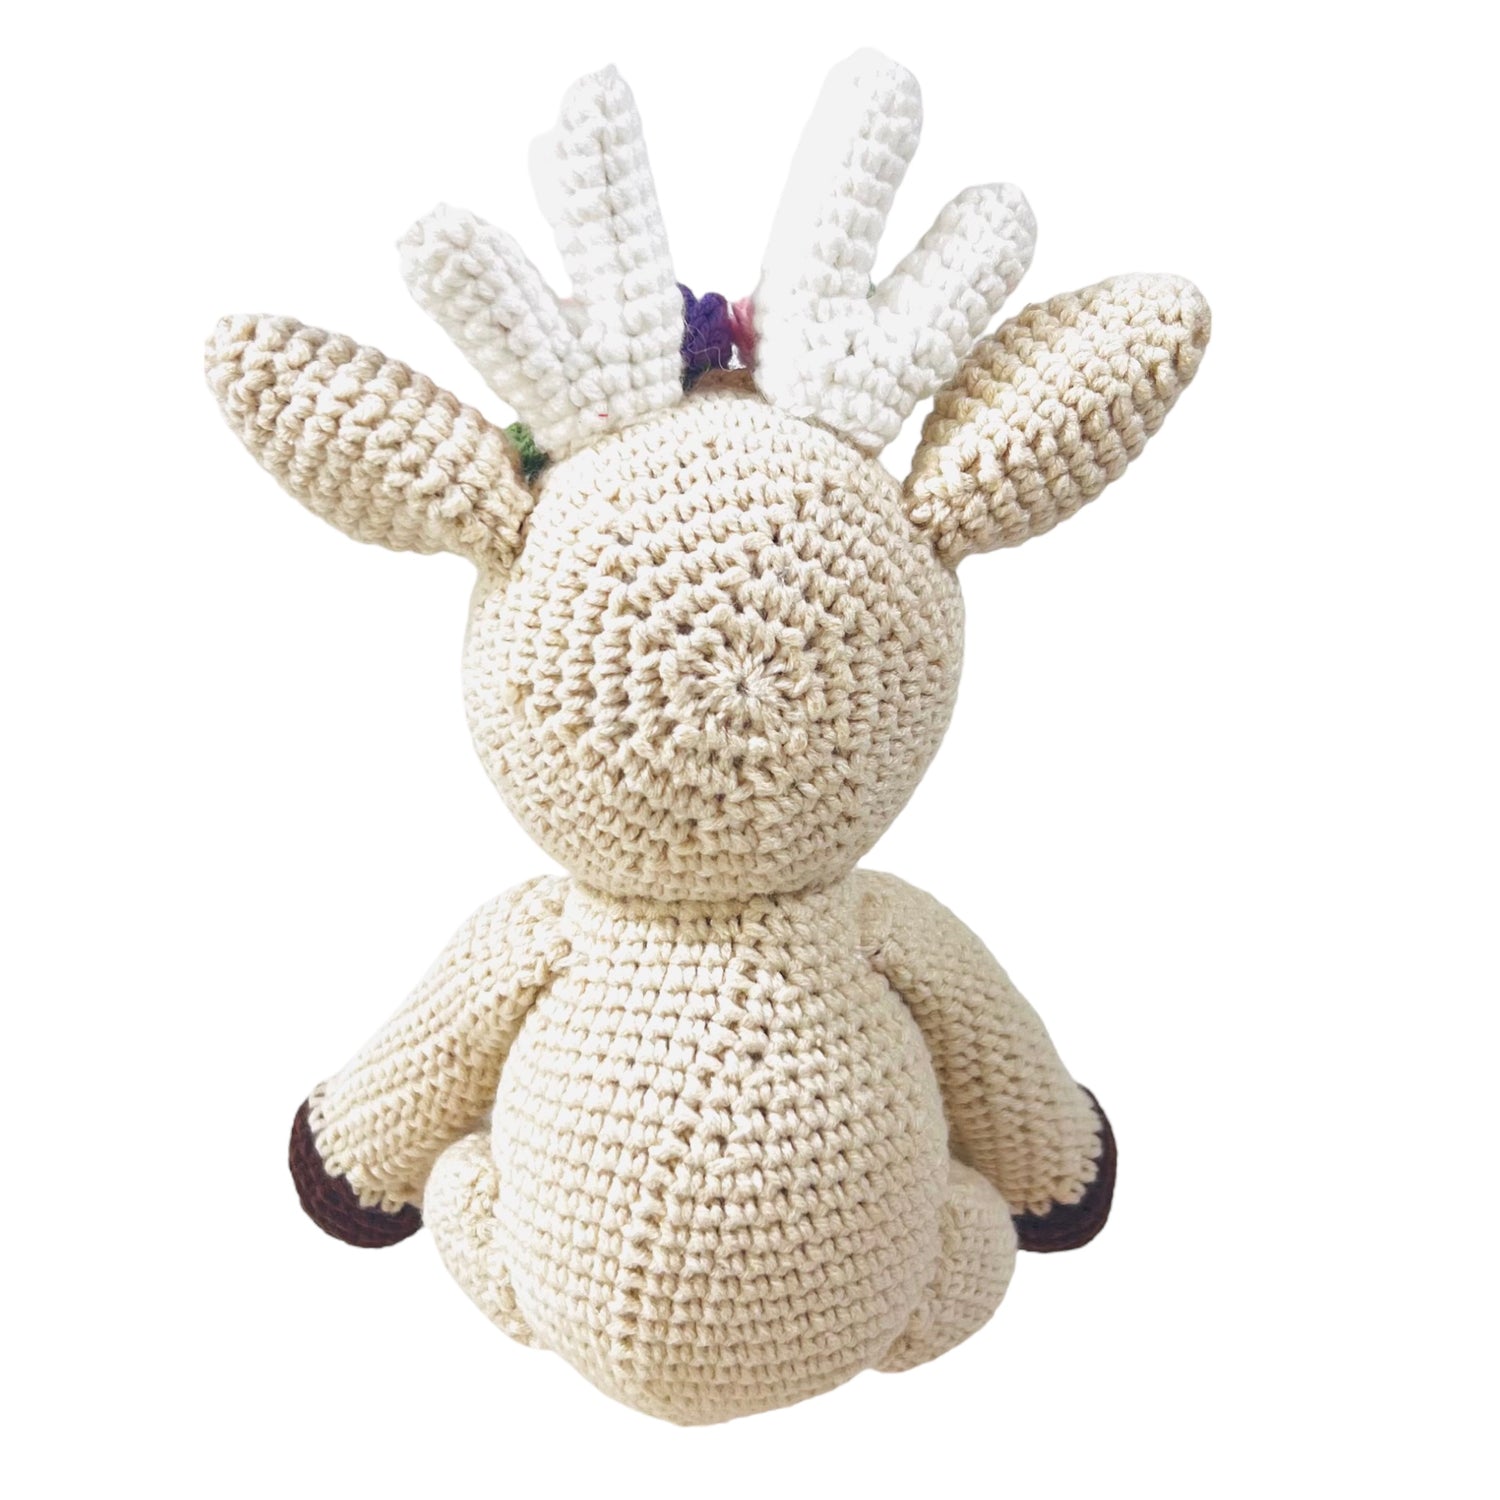 Crocheted Animal Doll - Penelope, the Reindeer